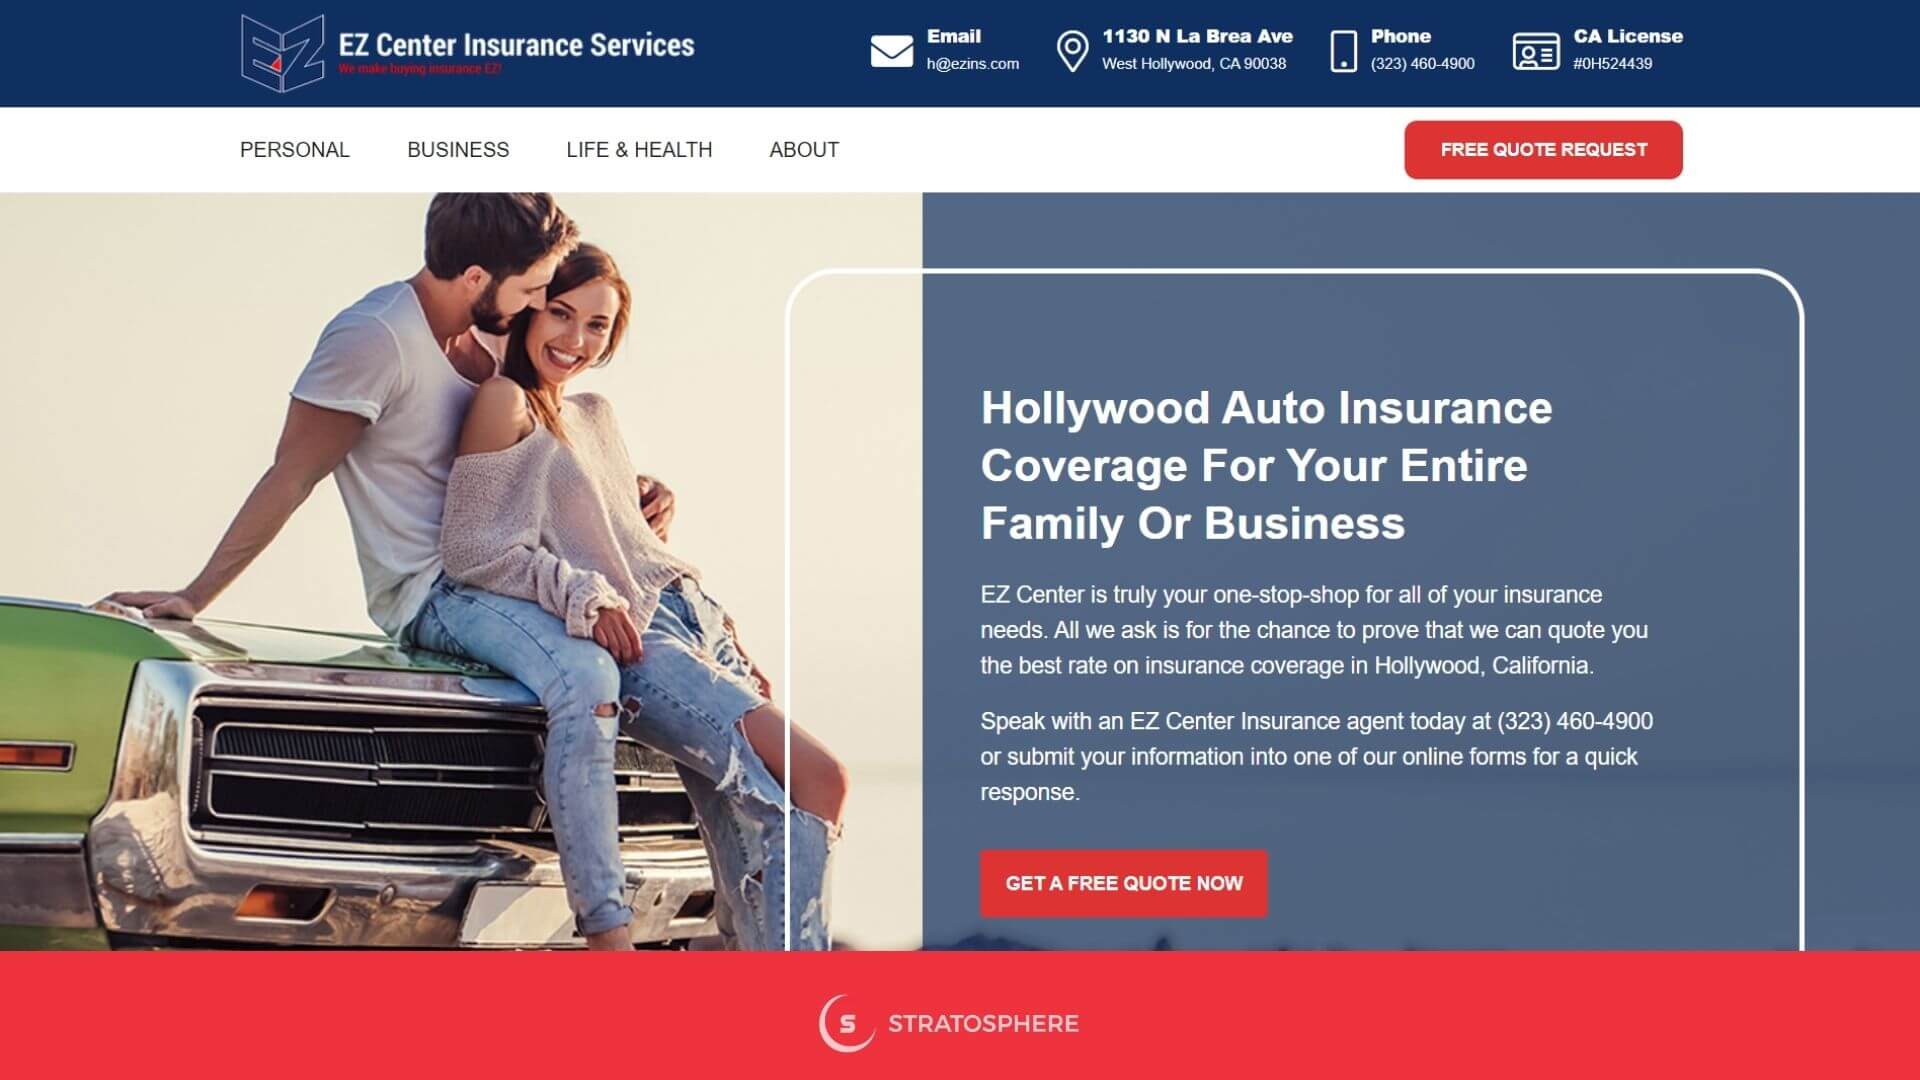 EZ Center Insurance Service Website with Culturally Relevant Design